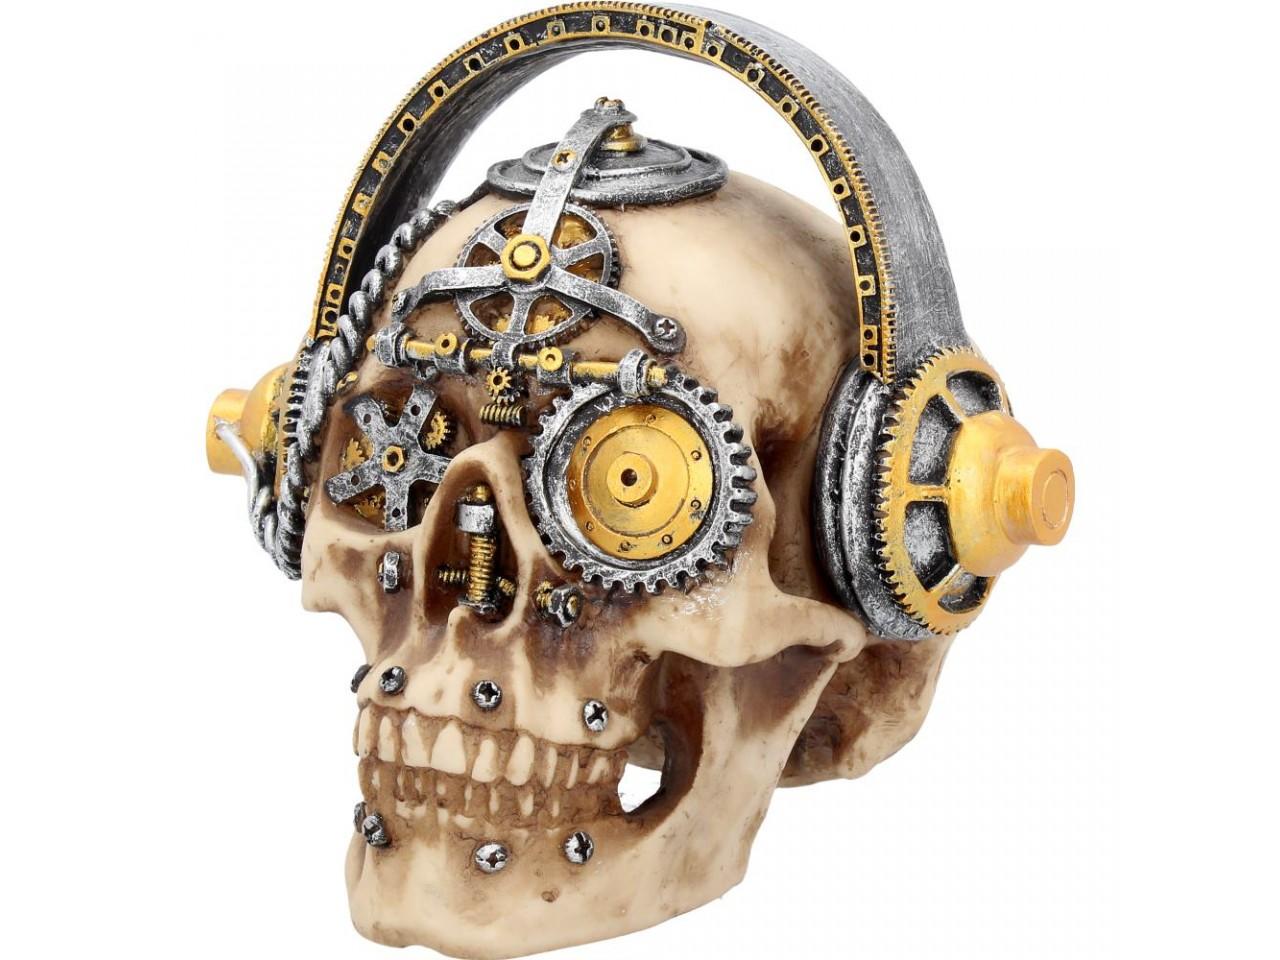 Techno Talk - Large (u2922h7) - steampunk skull sculpture